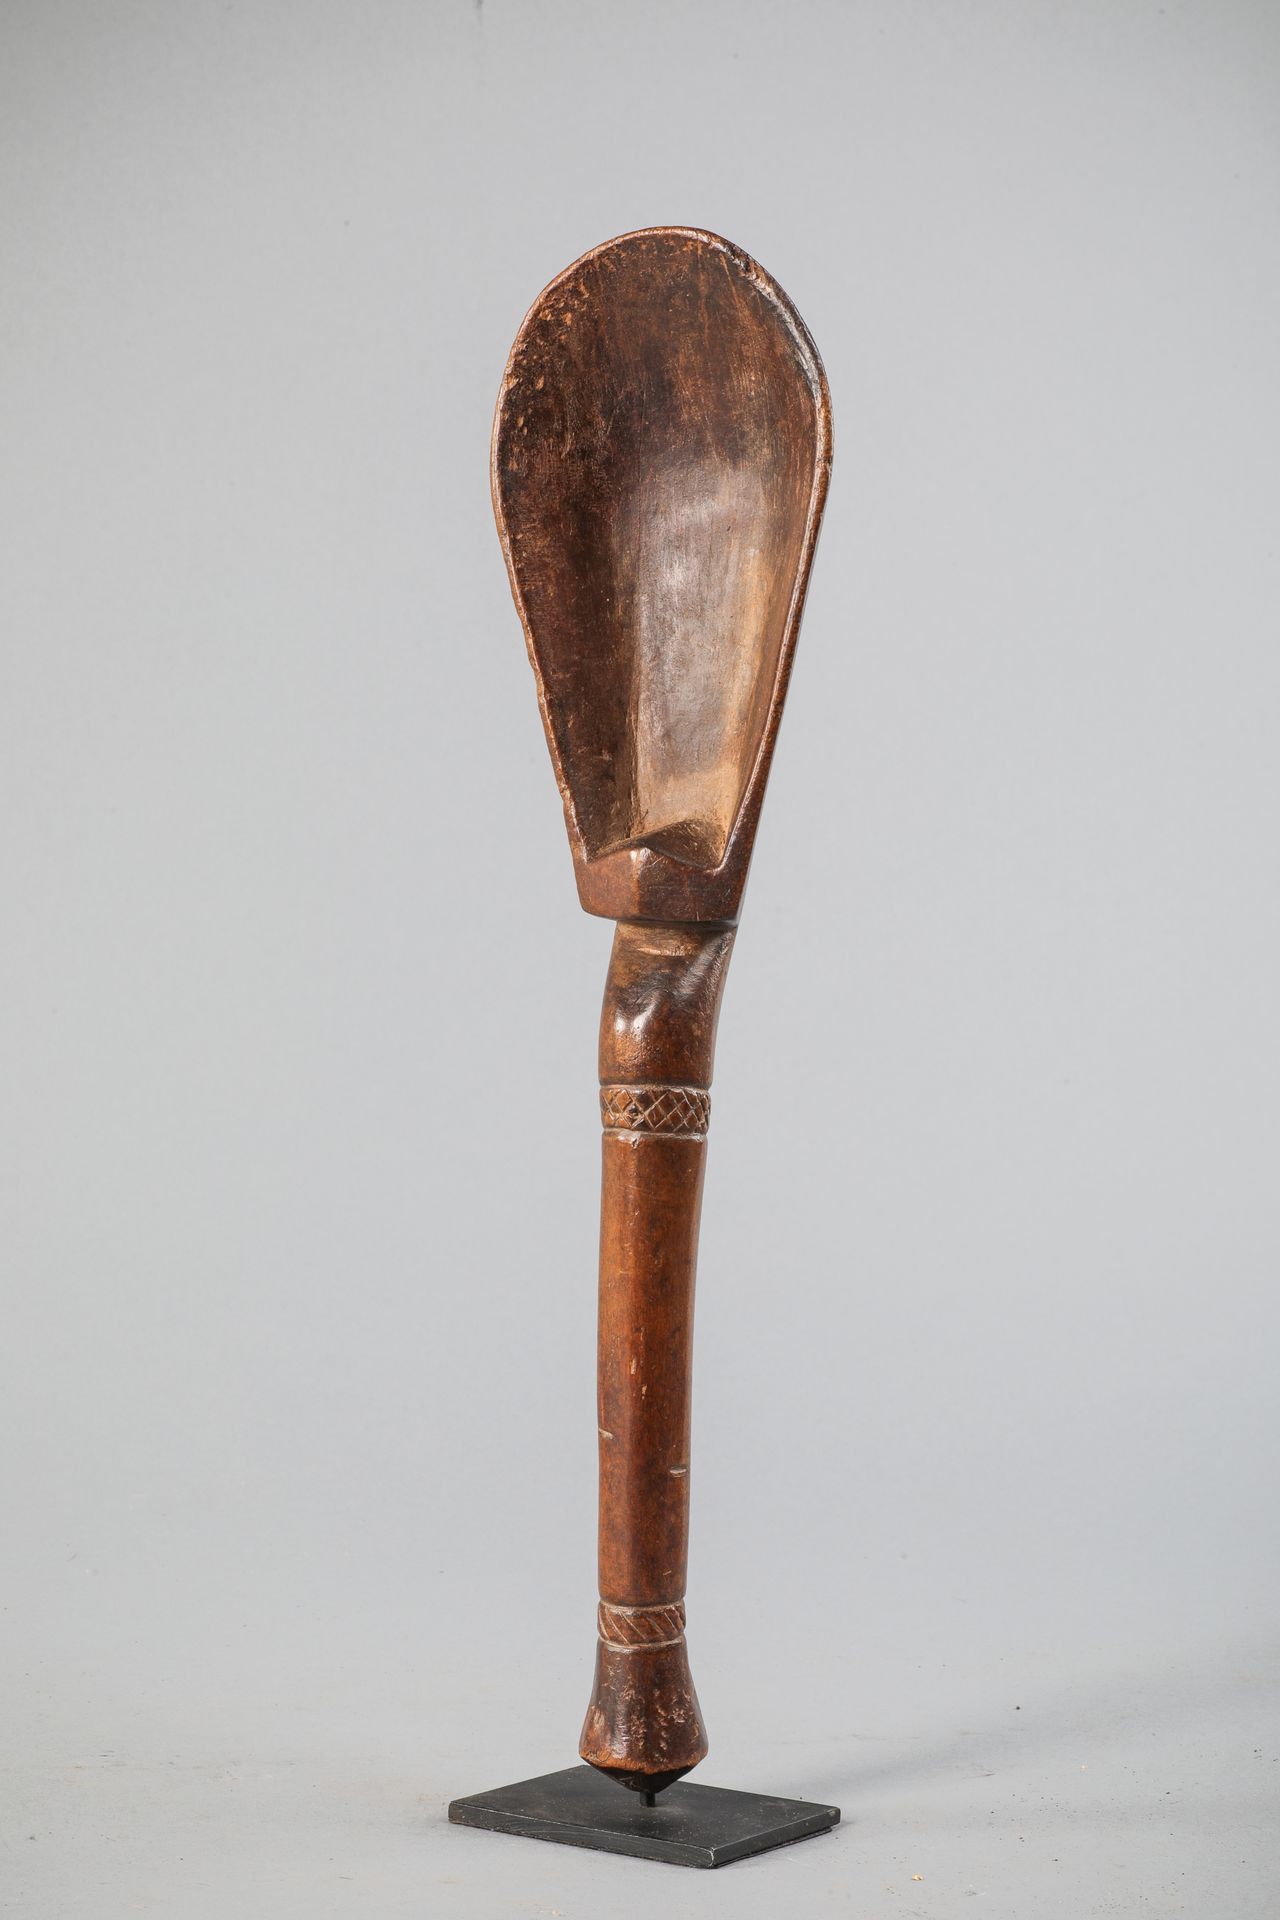 Null Dan spoon, Ivory Coast. Wood, light brown patina of deep use. L 49cm.